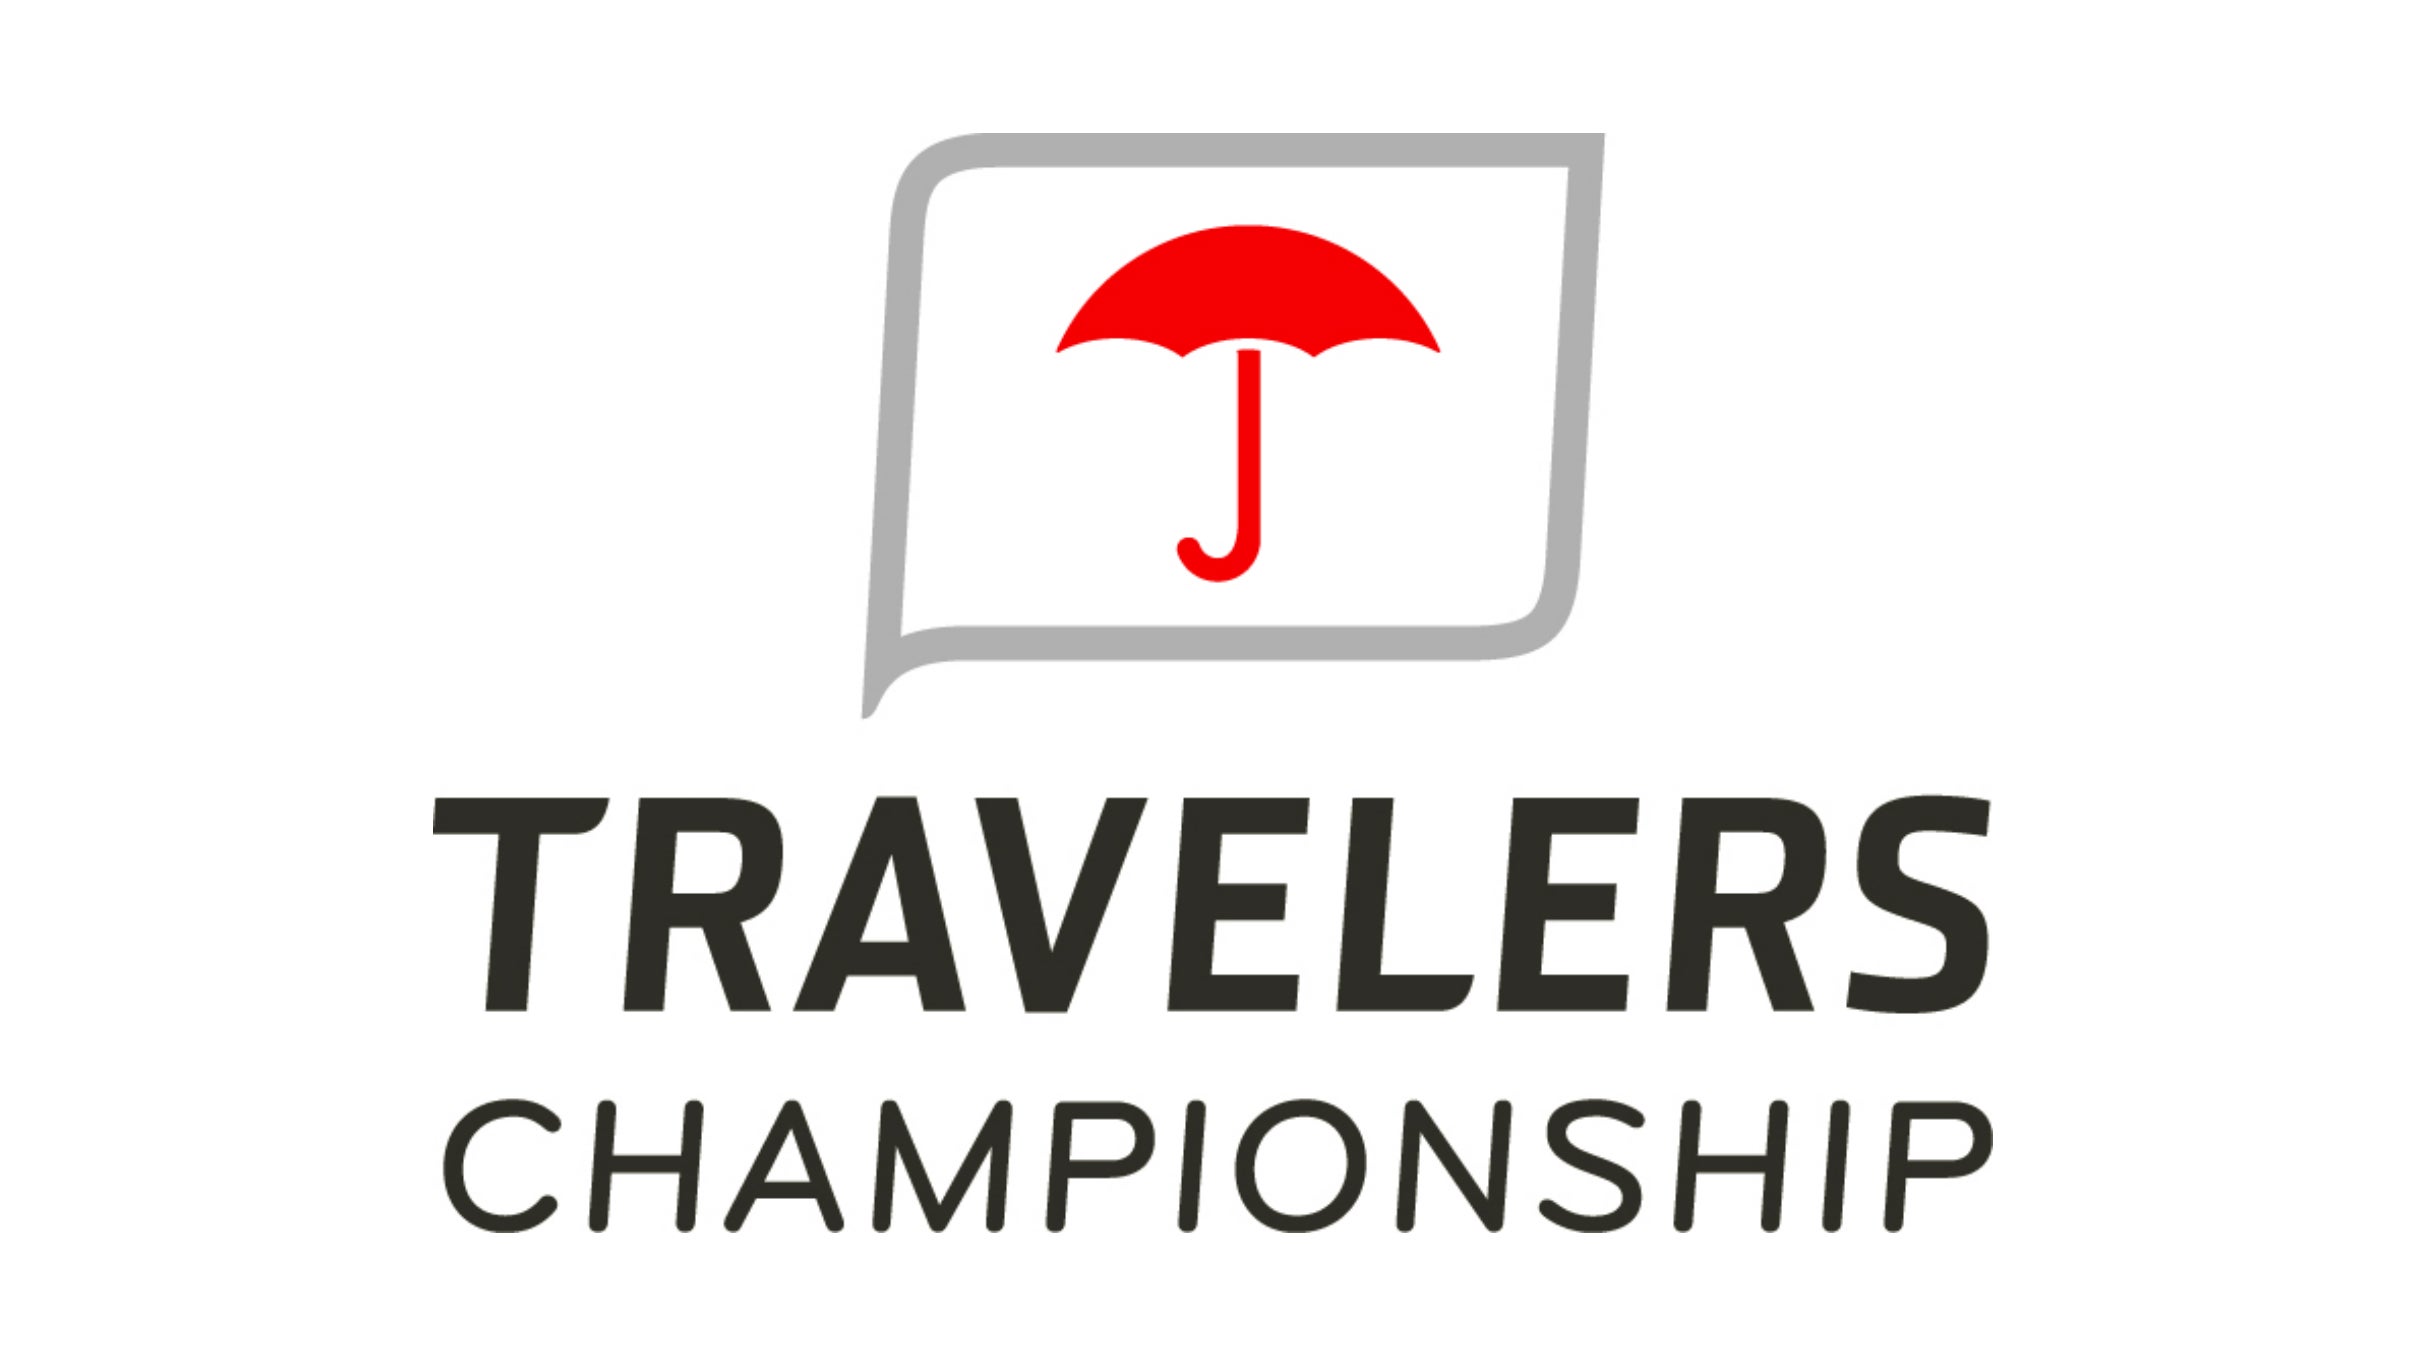 Travelers Championship Saturday at TPC River Highlands